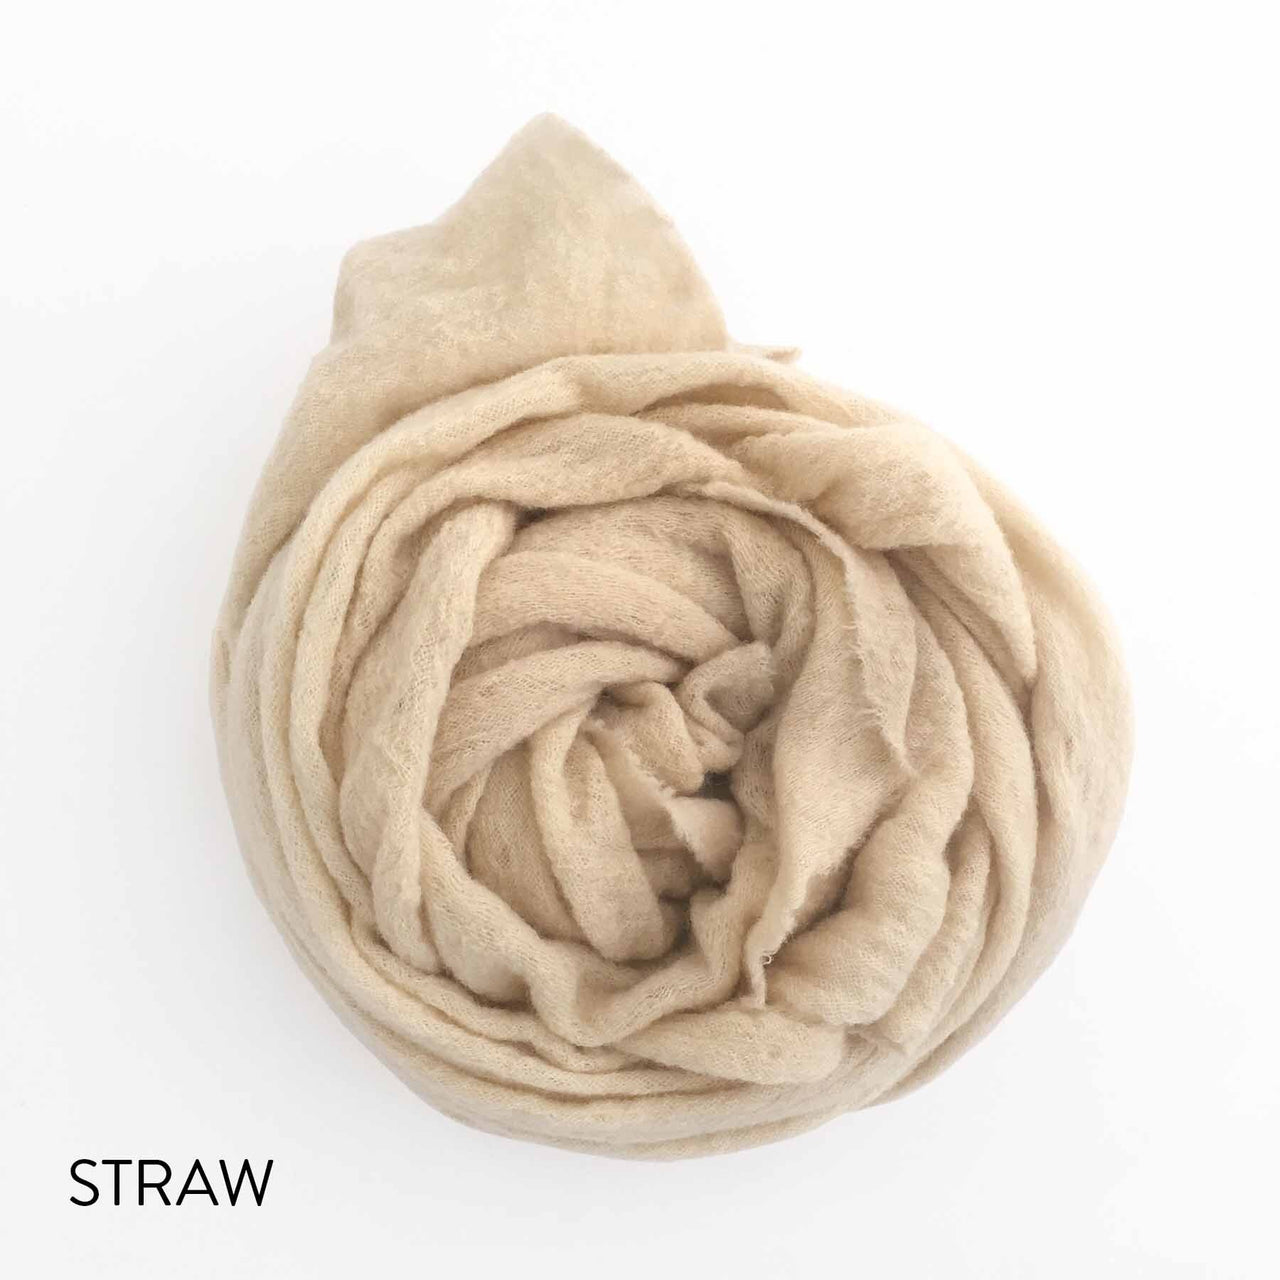 Wool Cloud Scarf in Straw